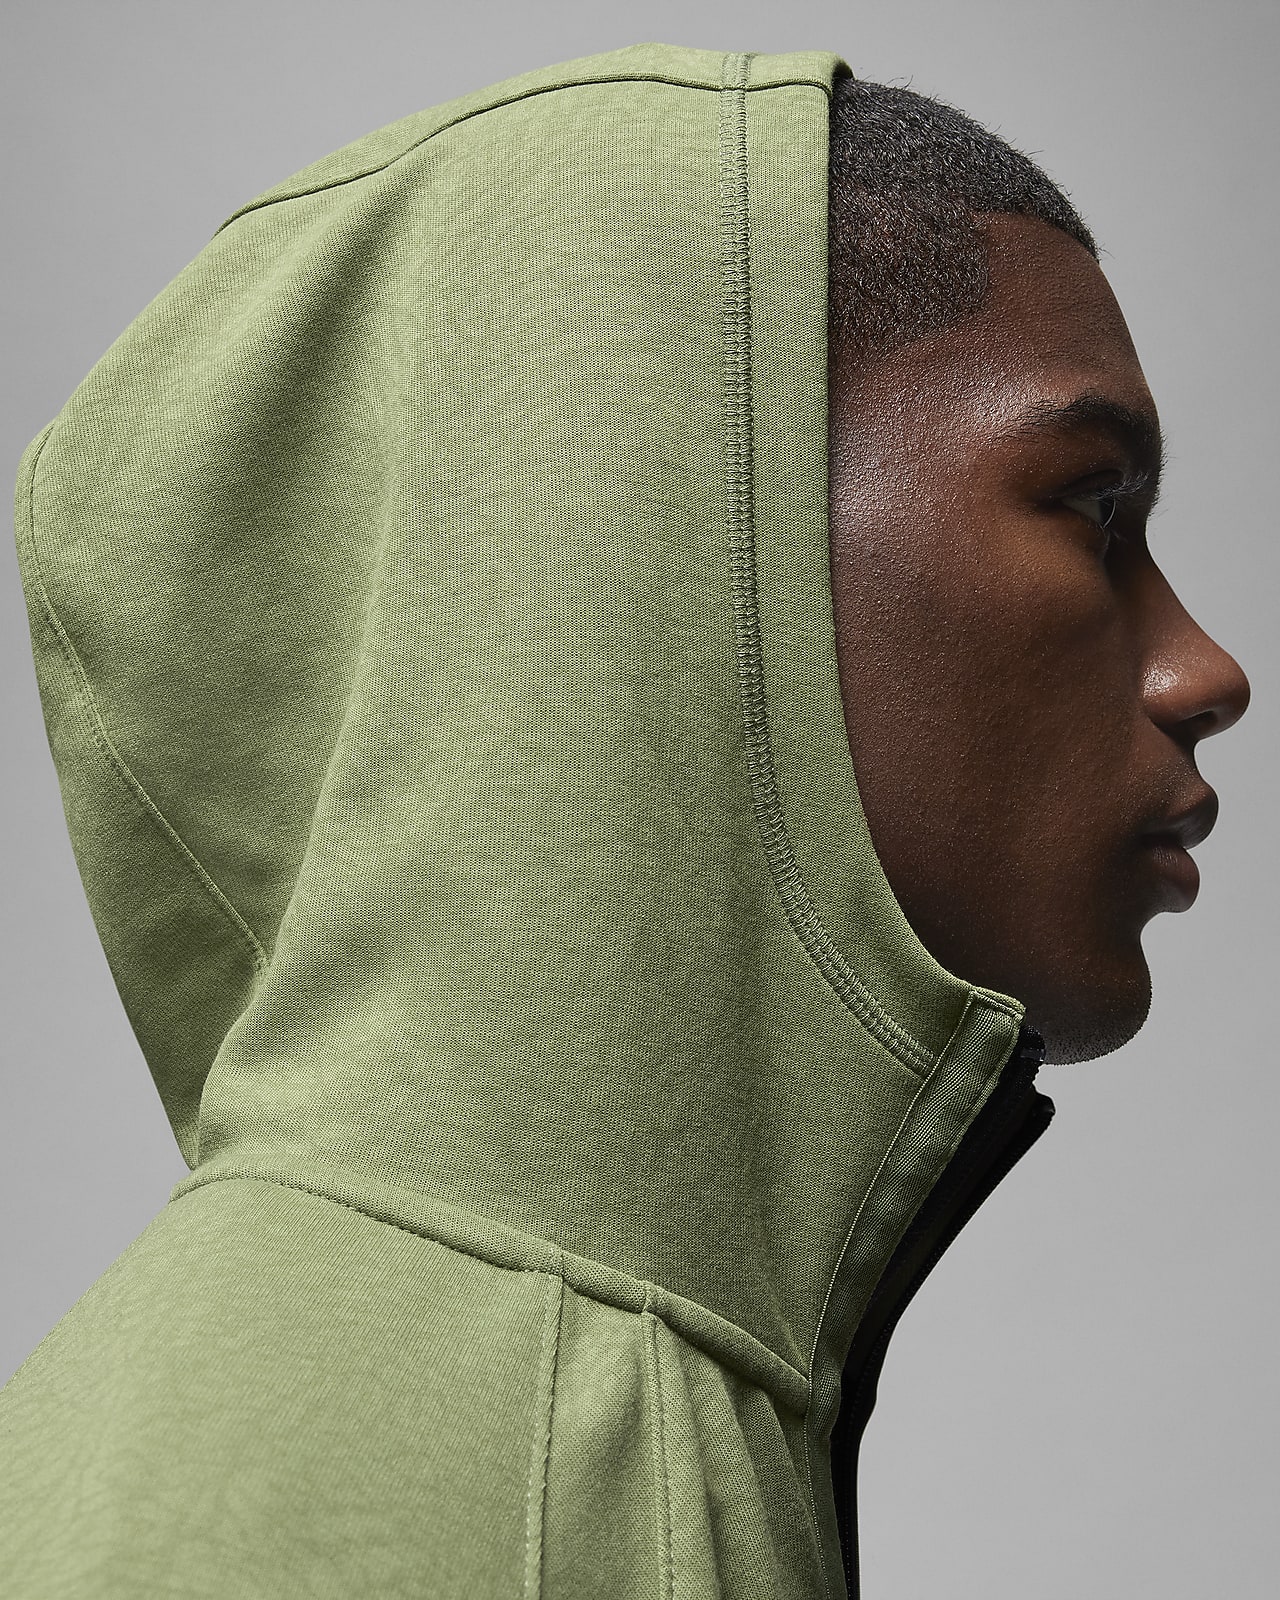 Nike Dri-FIT Men's Fleece Full-Zip Fitness Hoodie. Nike LU